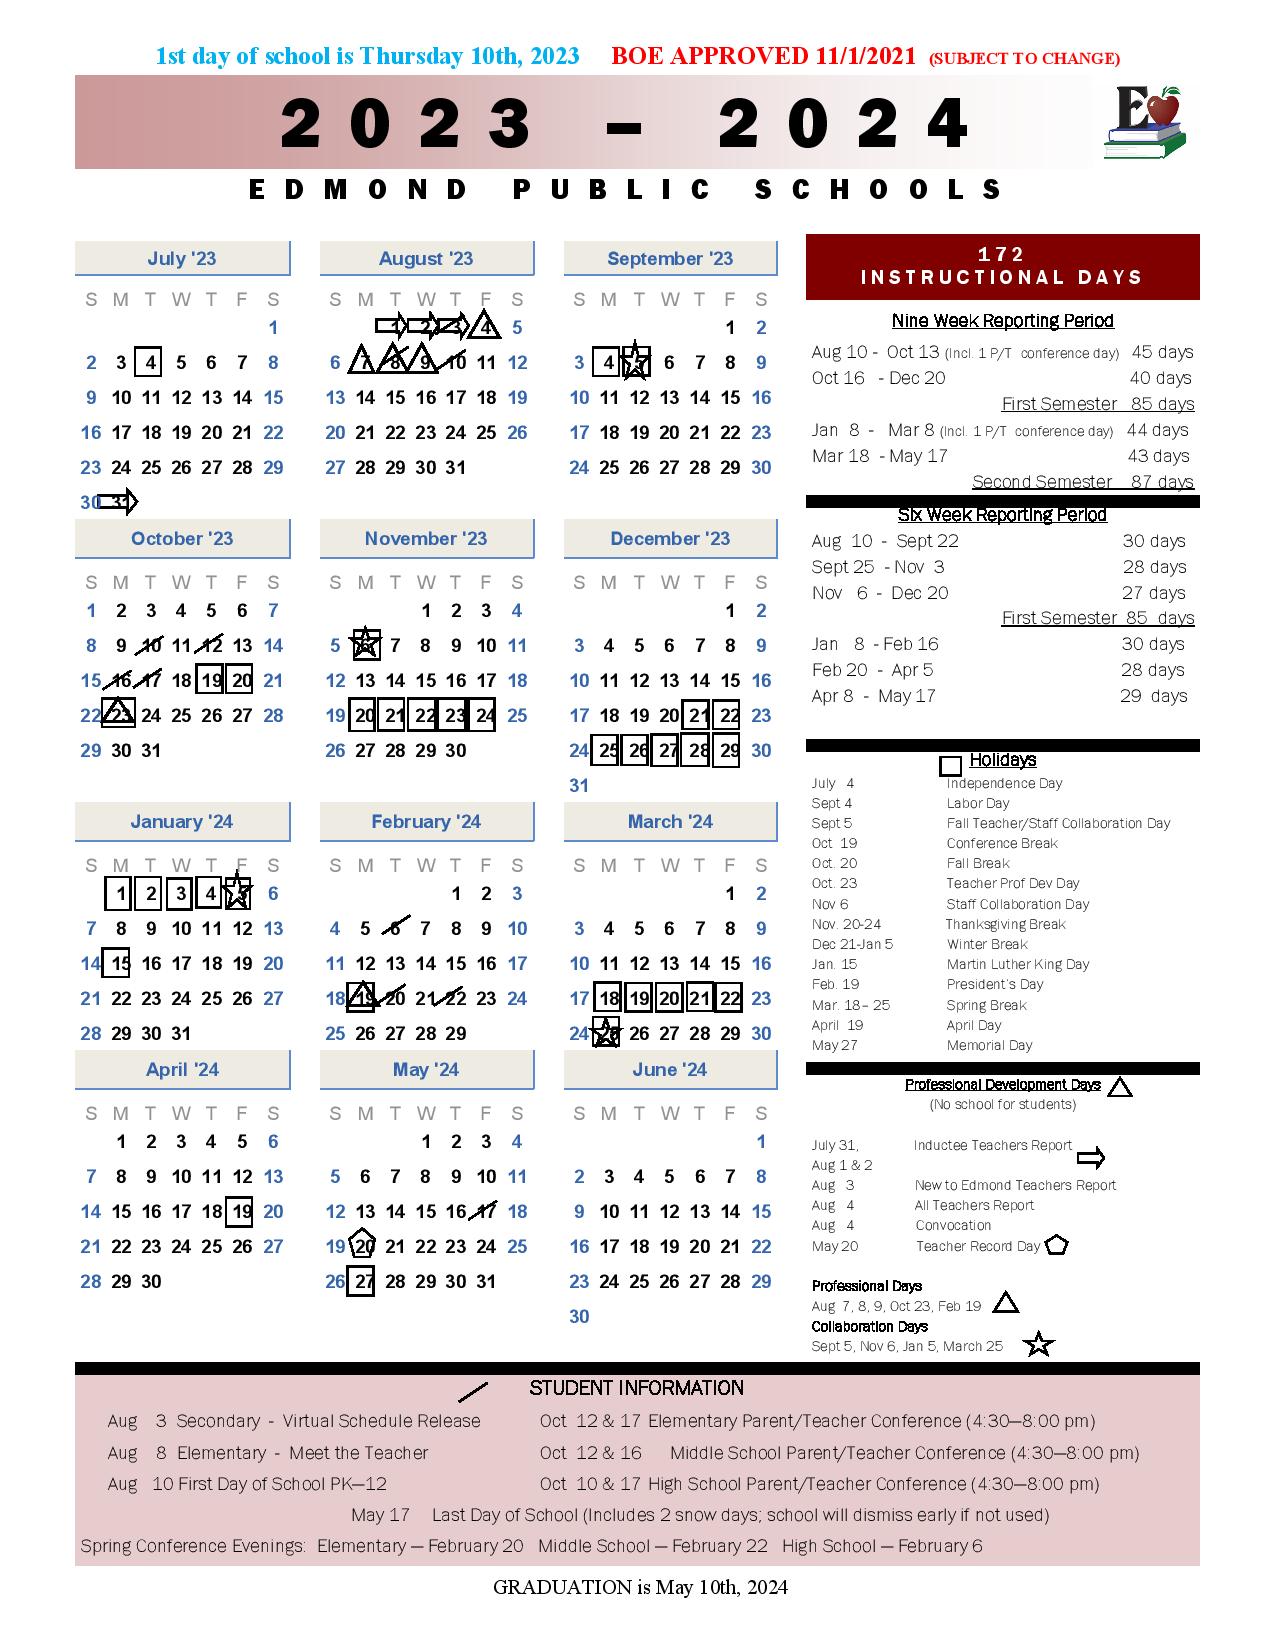 edmond-public-schools-calendar-2023-2024-in-pdf-school-calendar-info